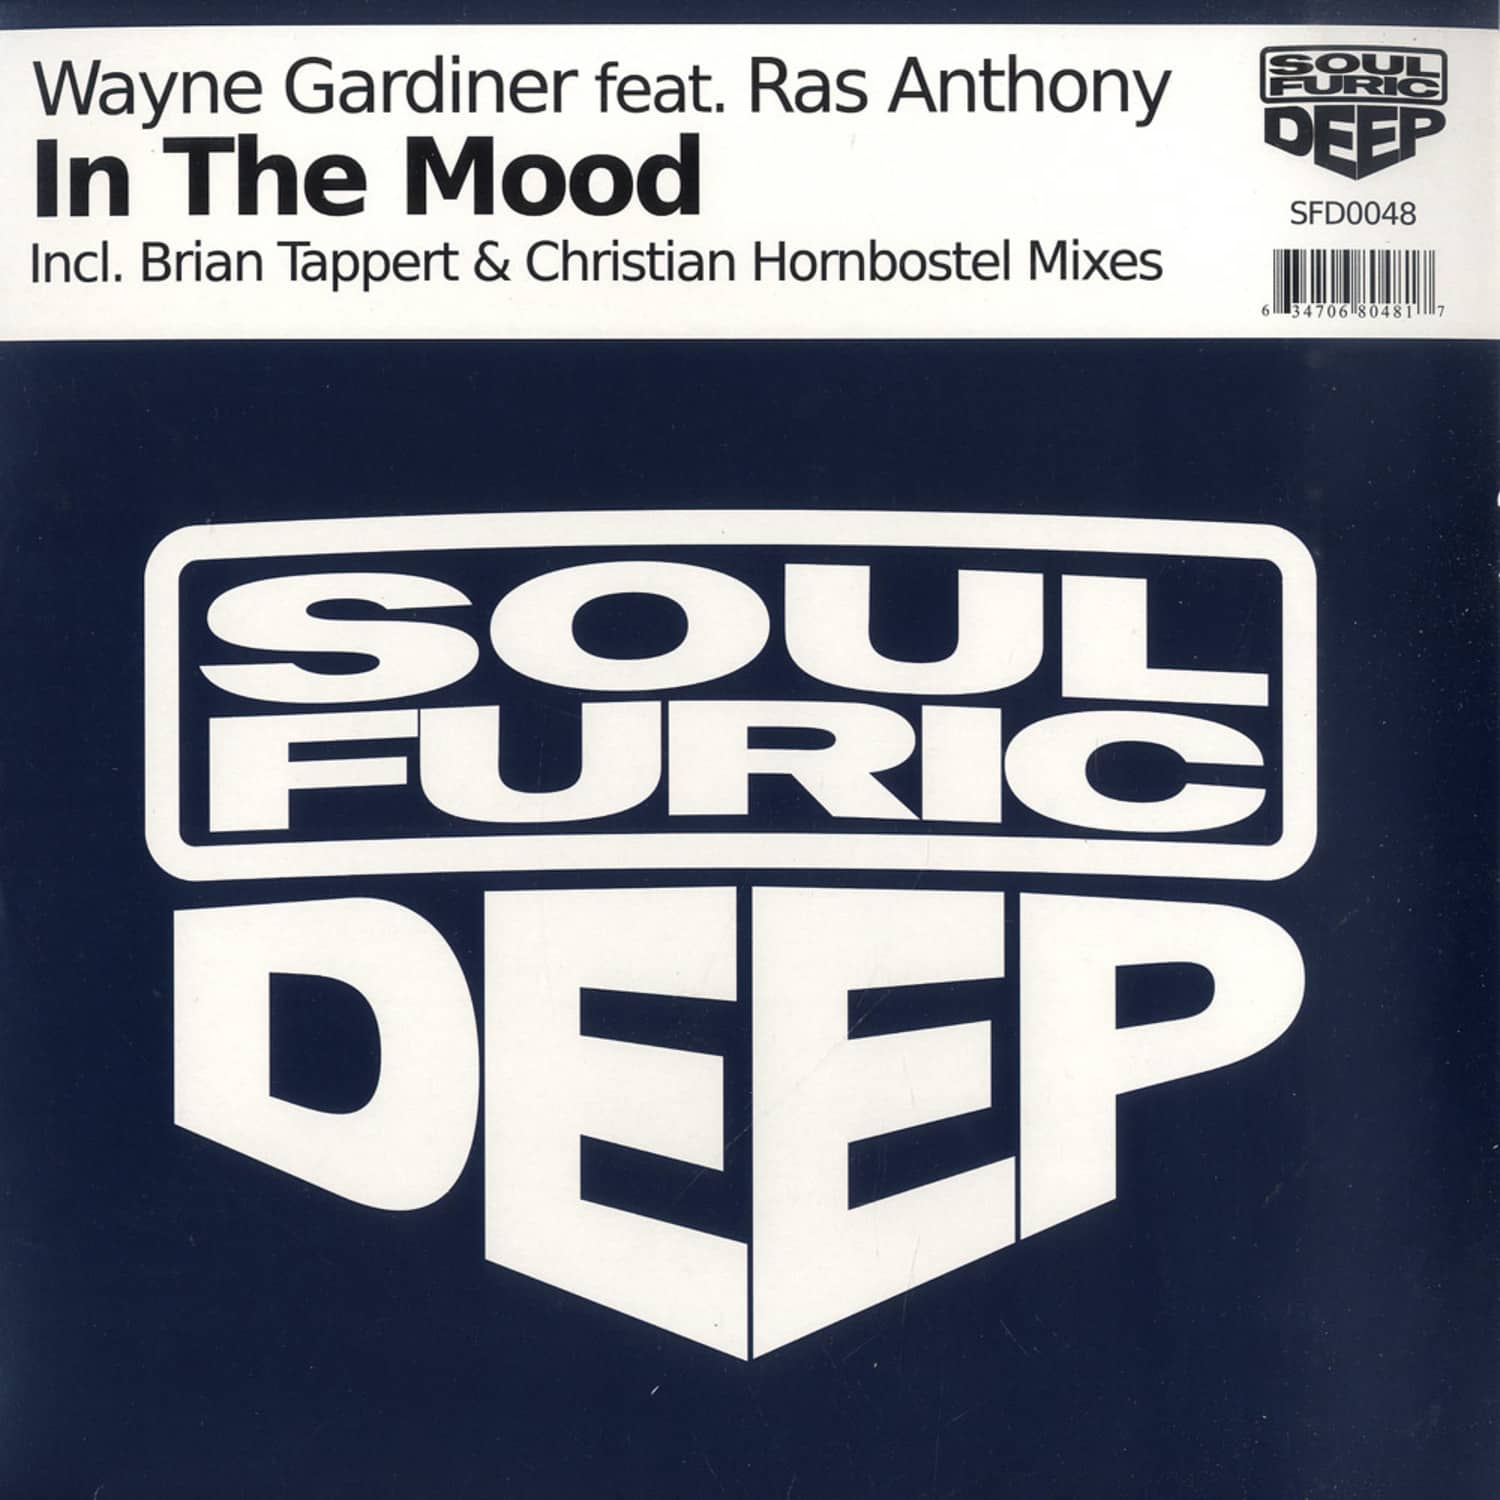 Wayne Gardiner ft. Ras Anthony - IN THE MOOD